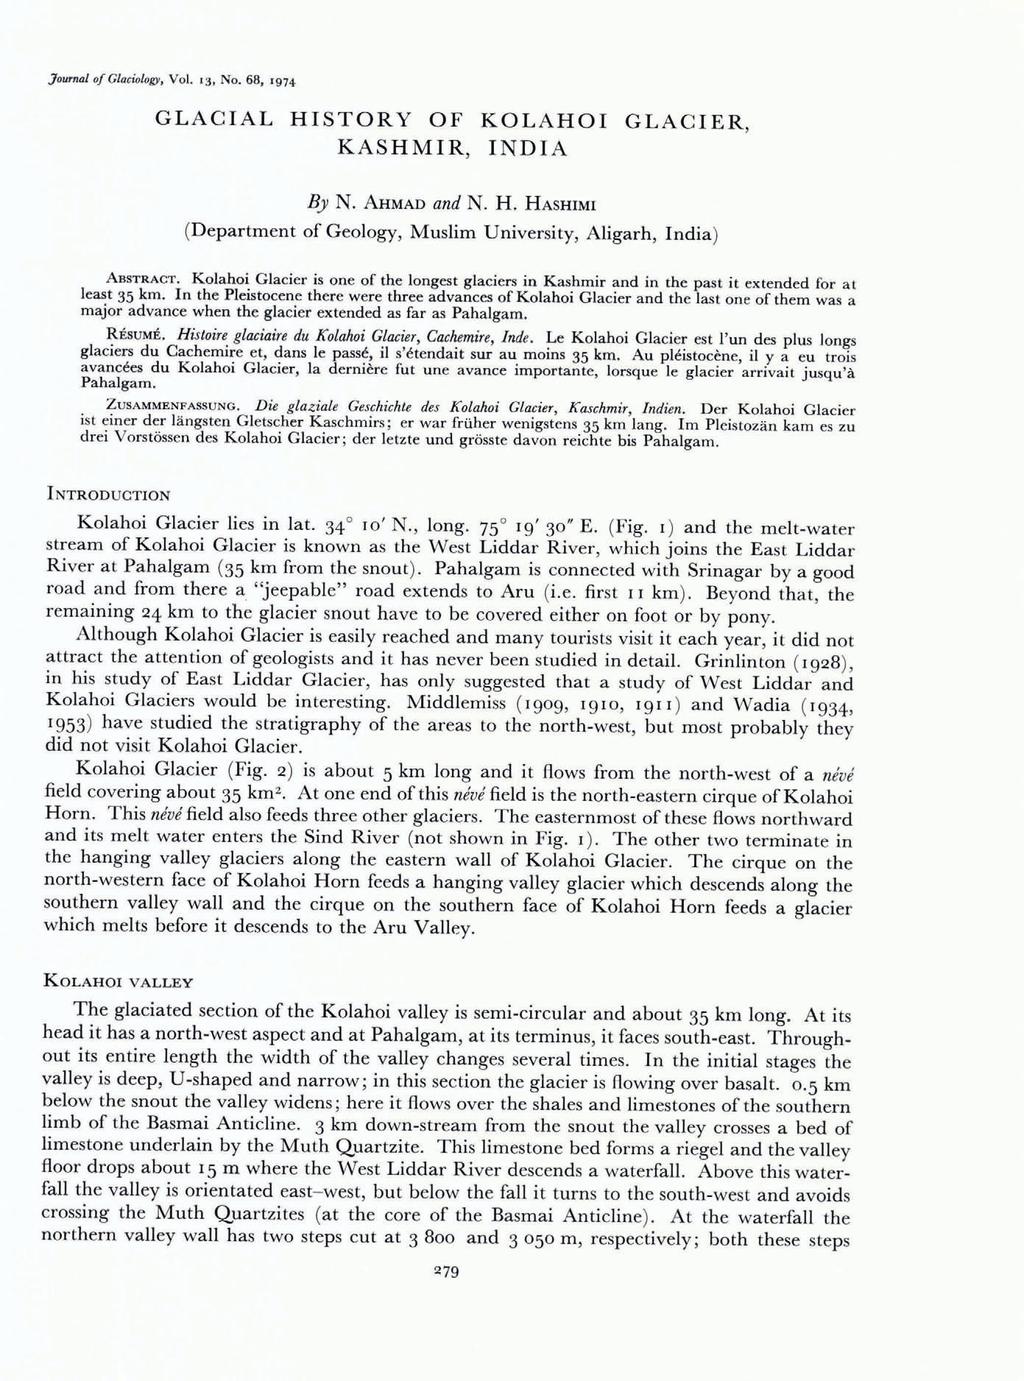 Journal DJ GlaciololJ)', Vol. '3, No. 68, '97~ GLACIAL HISTORY OF KOLAHOI GLACIER, KASHMIR, INDIA By N. AHMAD and N. H. HAsHIMI (Department of Geology, Muslim University, Aligarh, India) ABSTRACT.